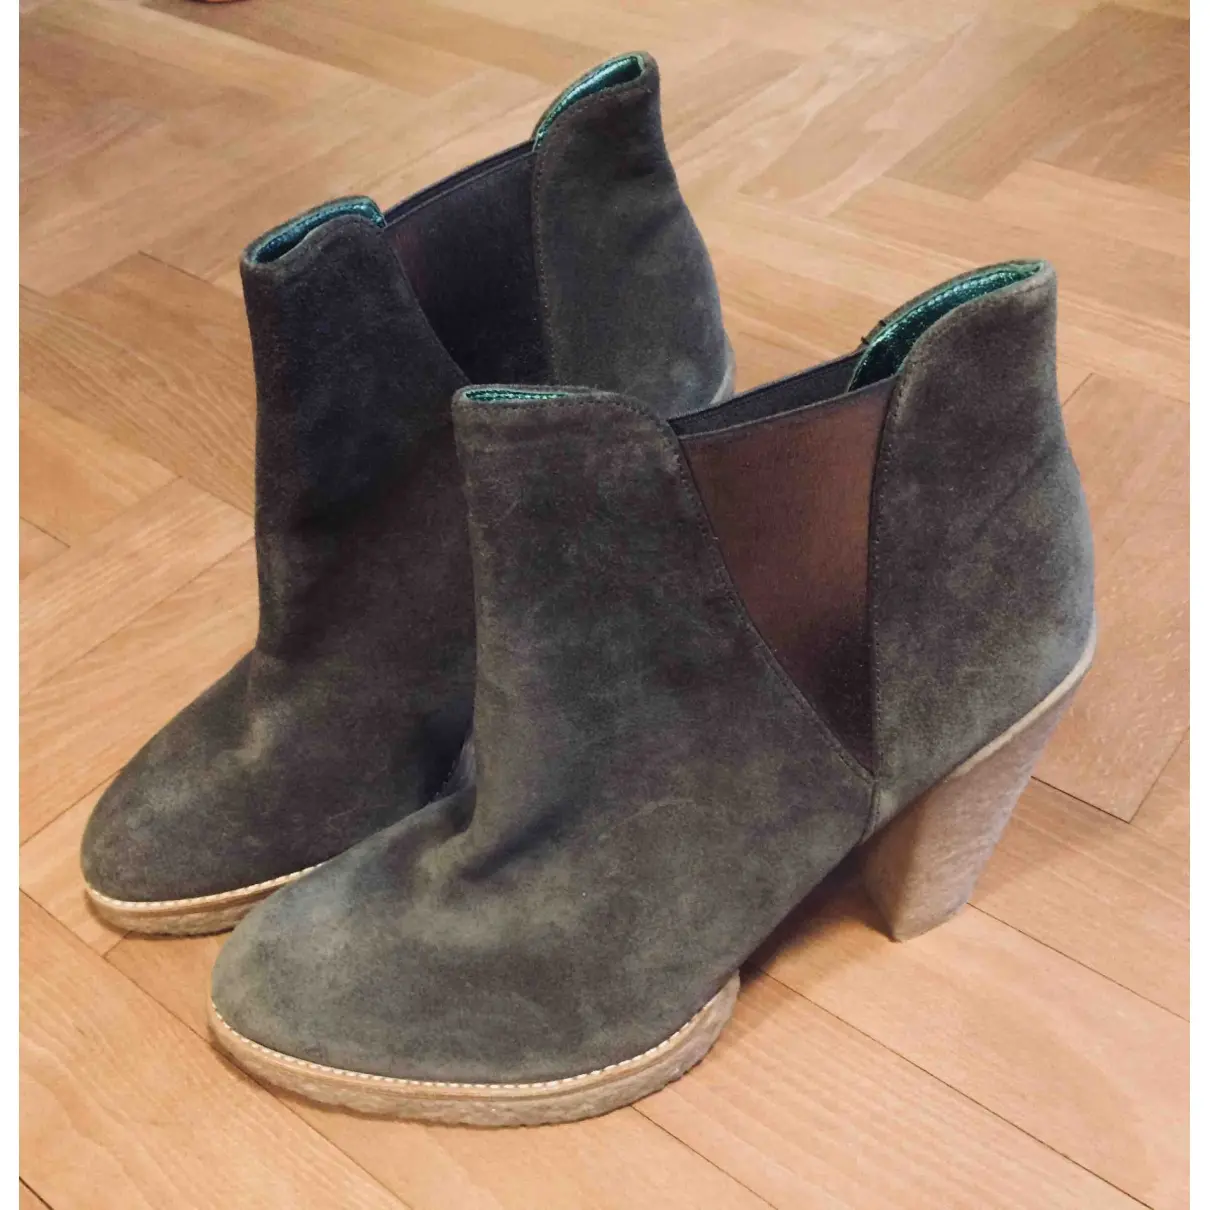 Buy Belle Sigerson Morrison Ankle boots online